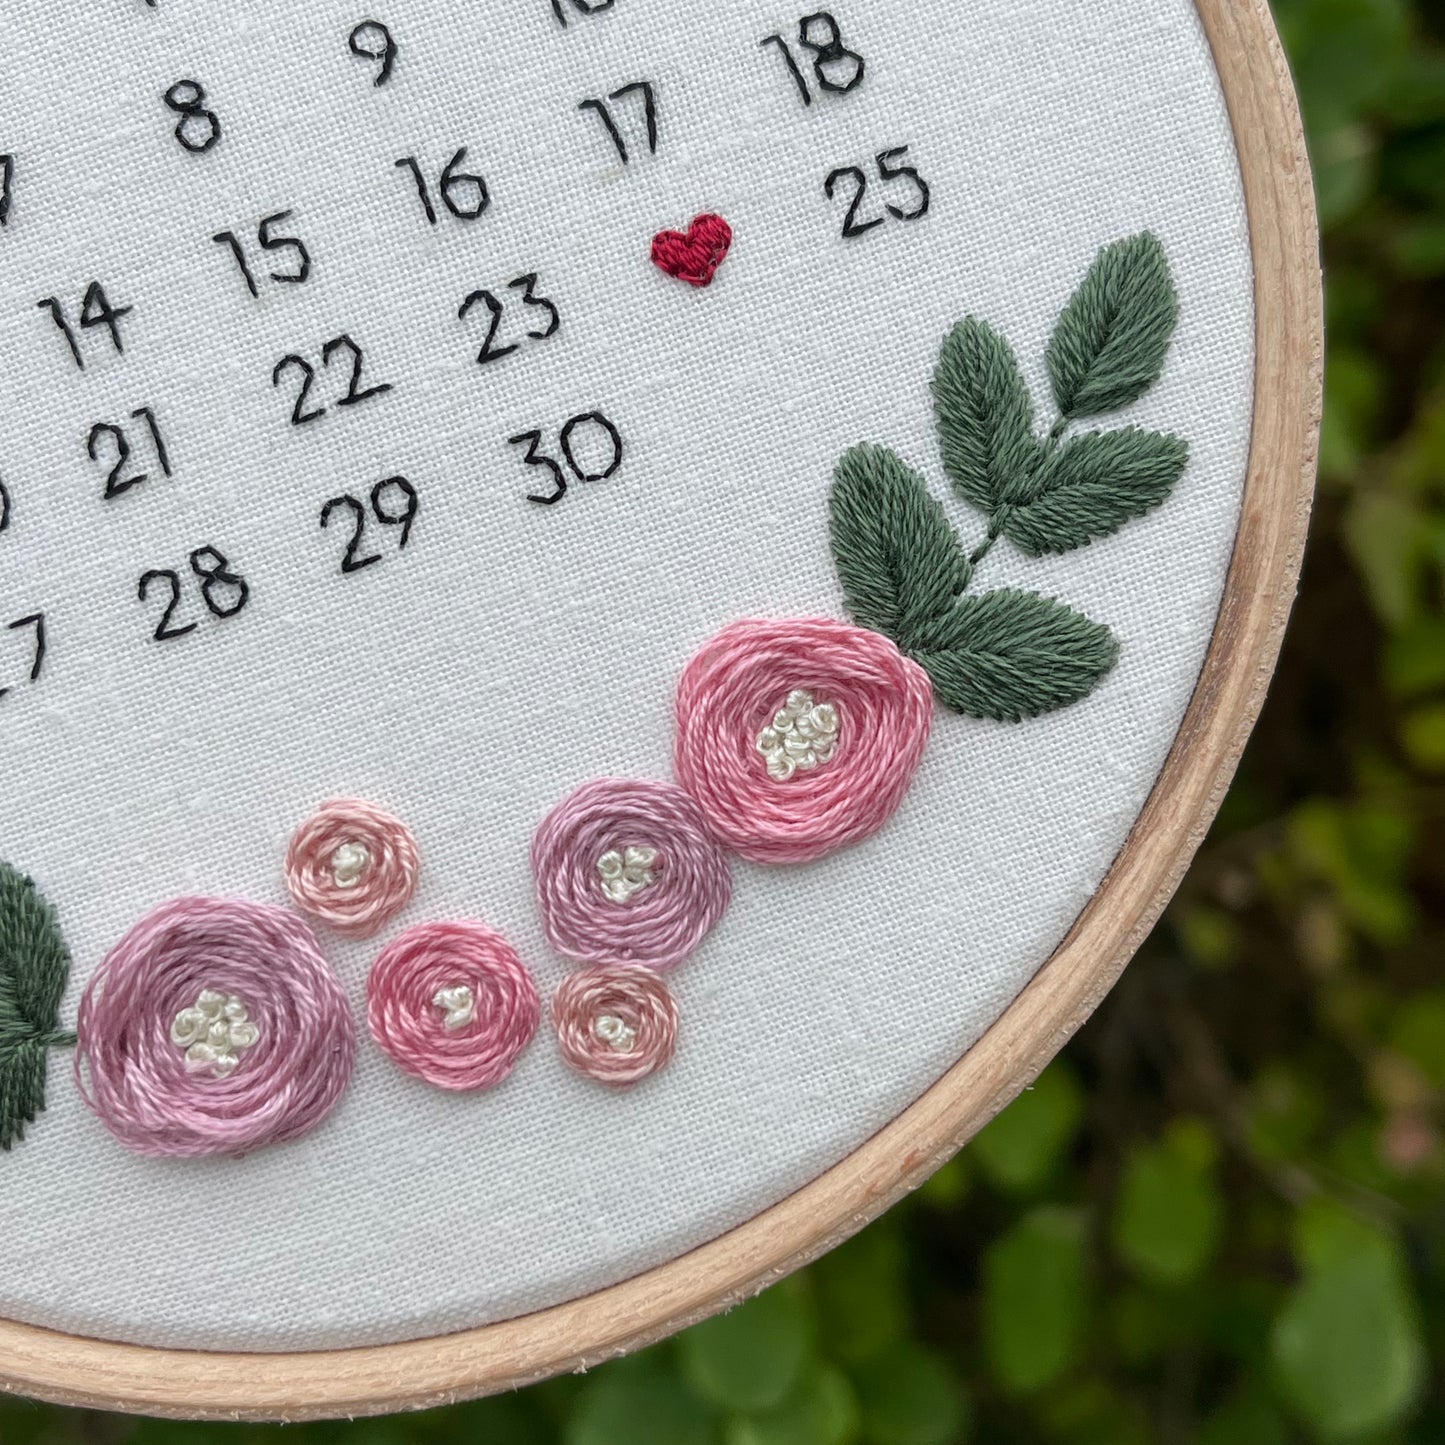 Wedding Calendar Hand Embroidery Hoop